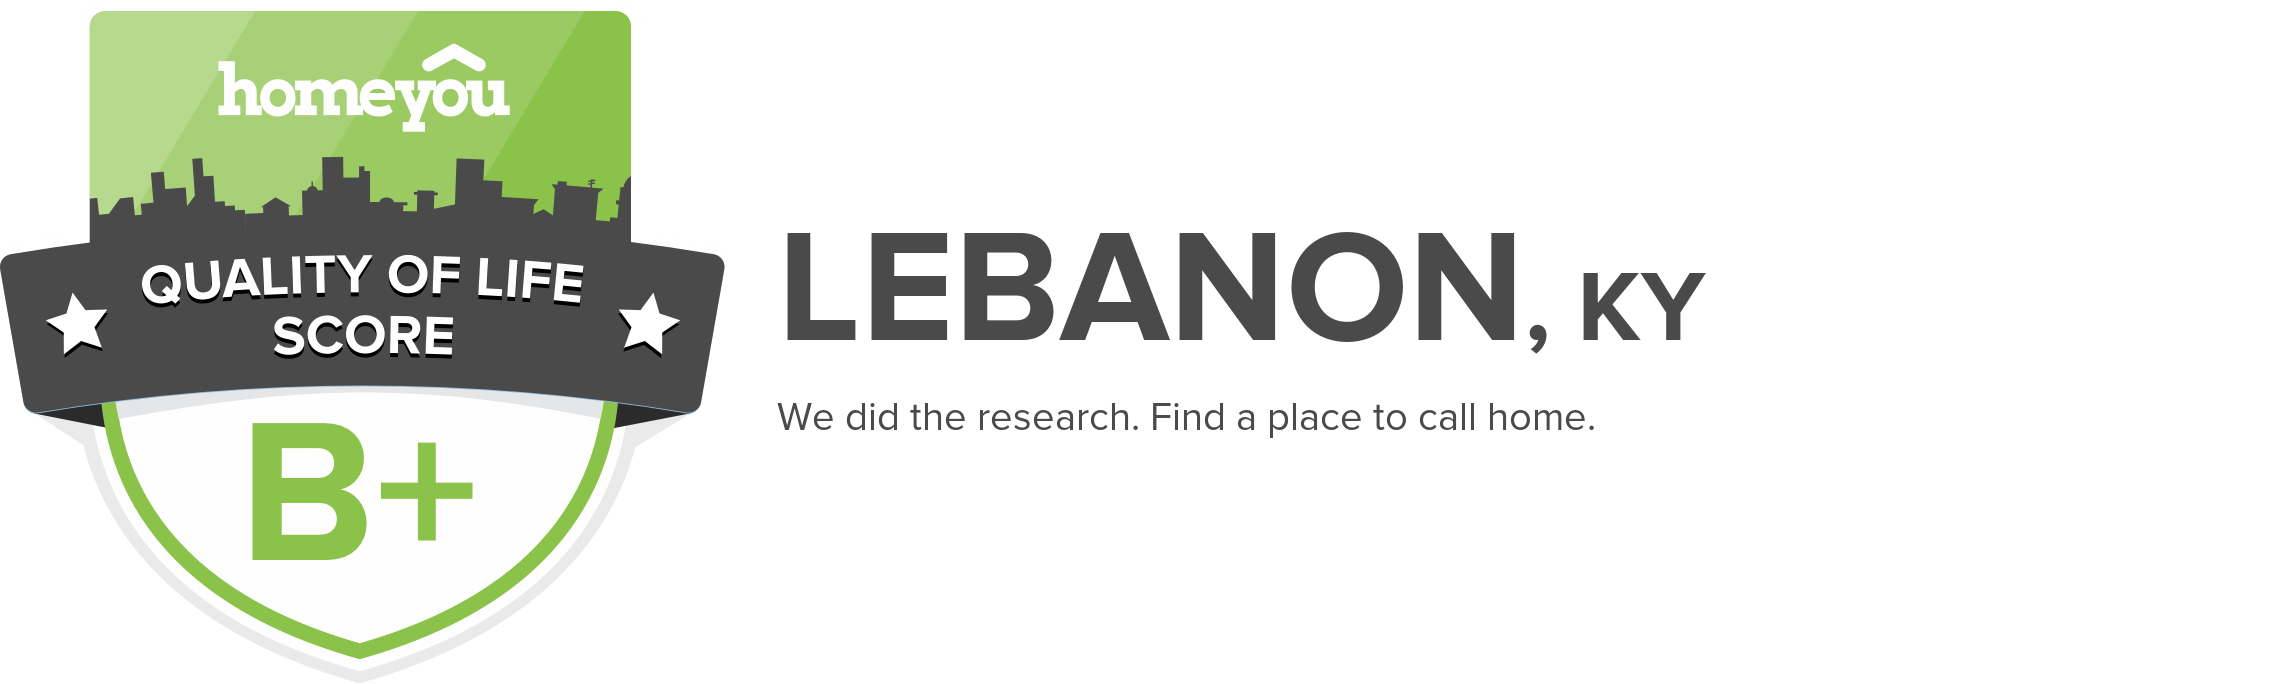 Lebanon, KY